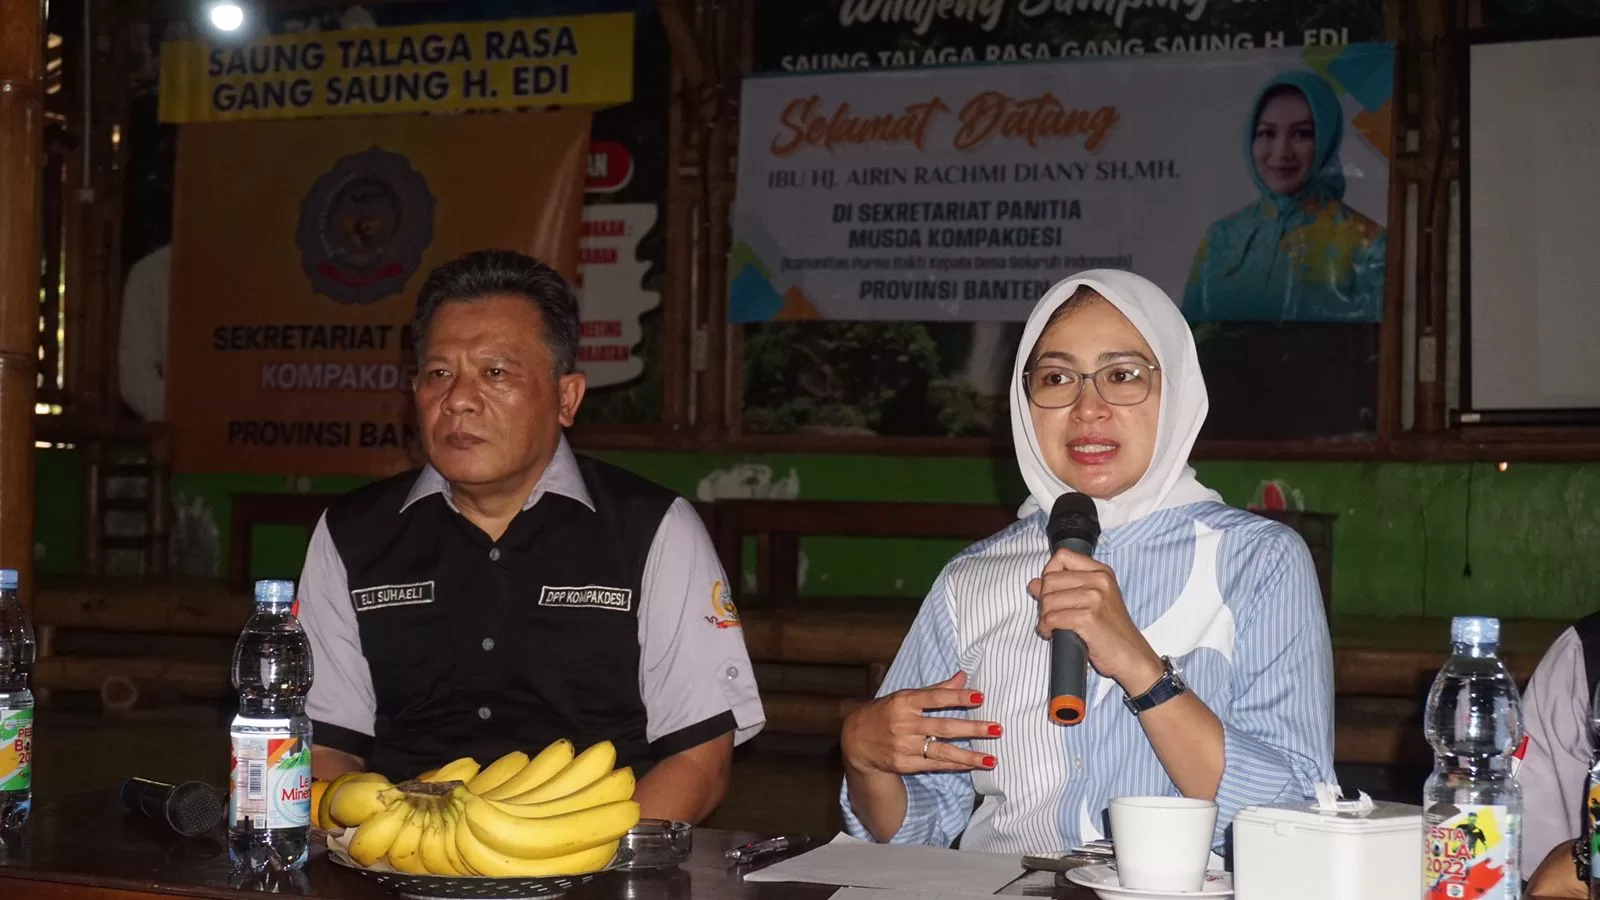 Mantan Kepala Desa di Banten Kompak Dukung Airin Rachmi Diany